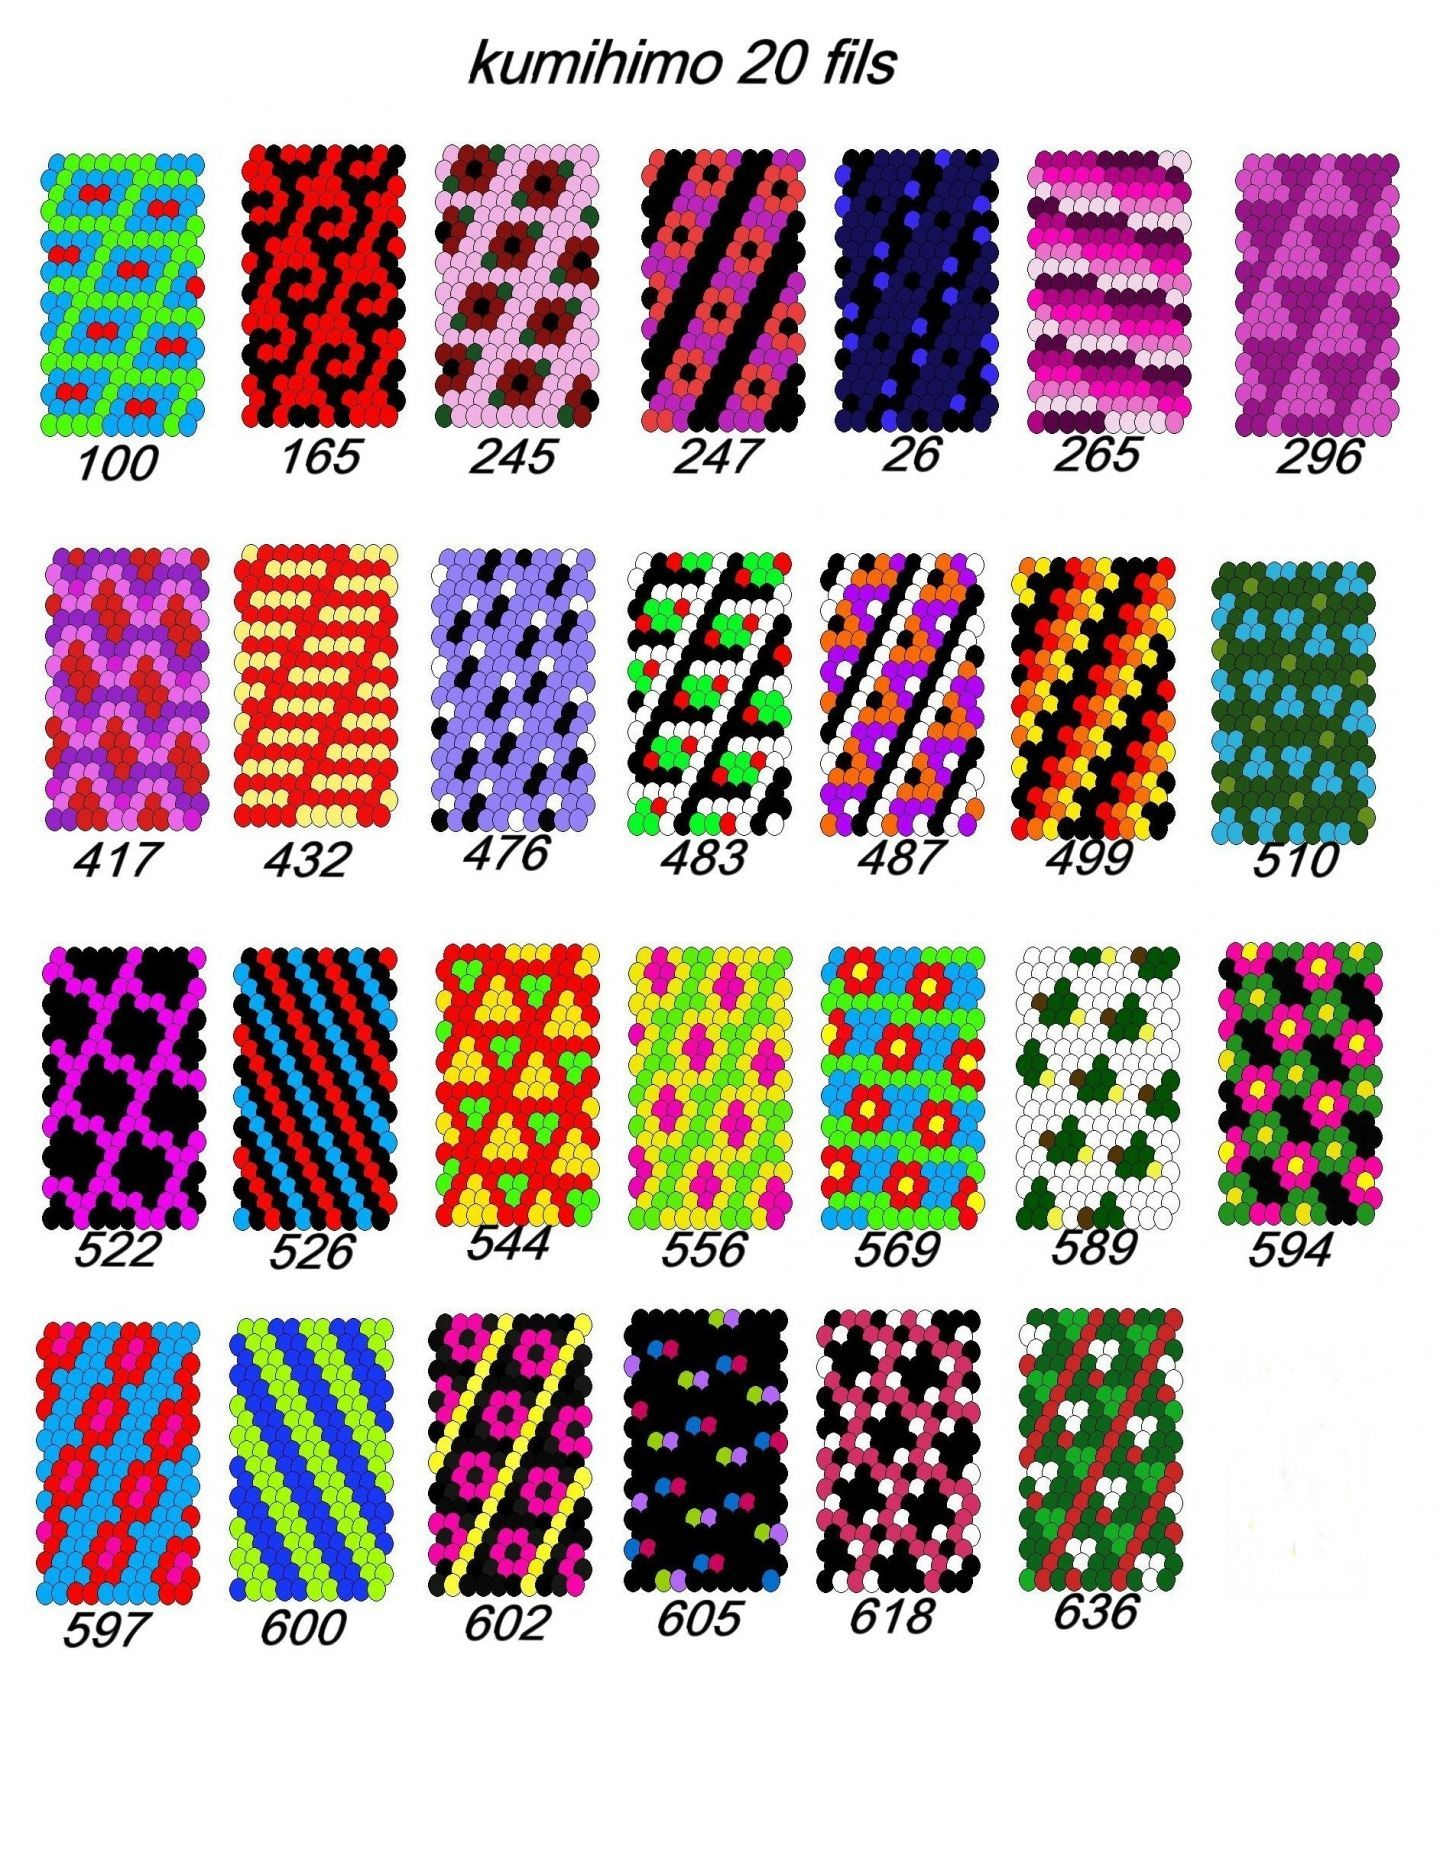 Crochet Pattern Generator Image Result For Kumihimo Patterns With Beads Generator Kumi